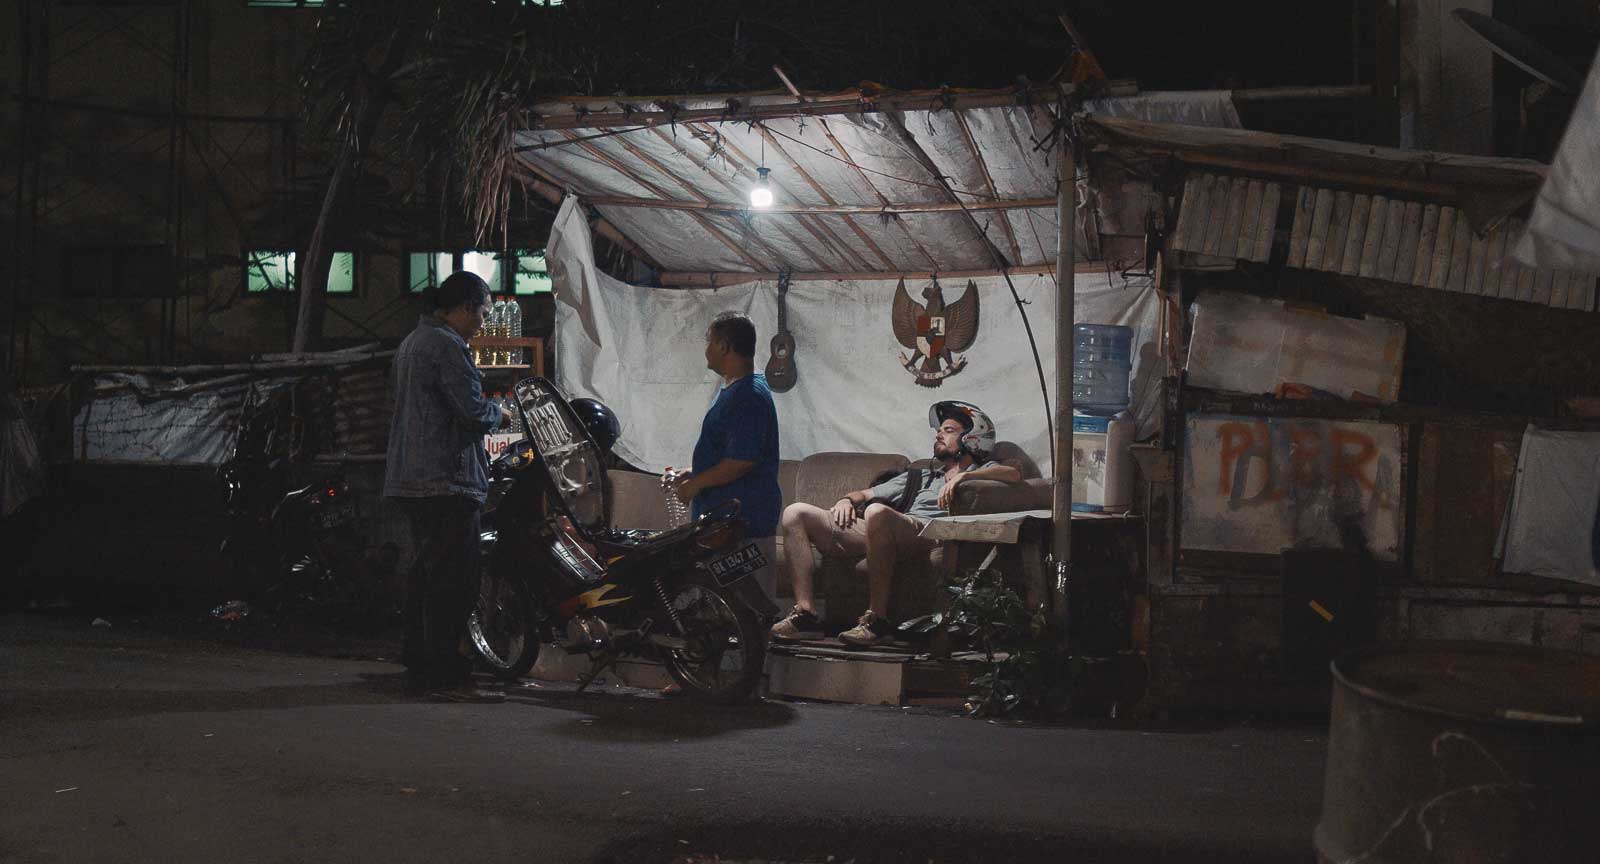 Balik Jakarta, a film by Jason Iskandar. Produced by Studio Antelope.